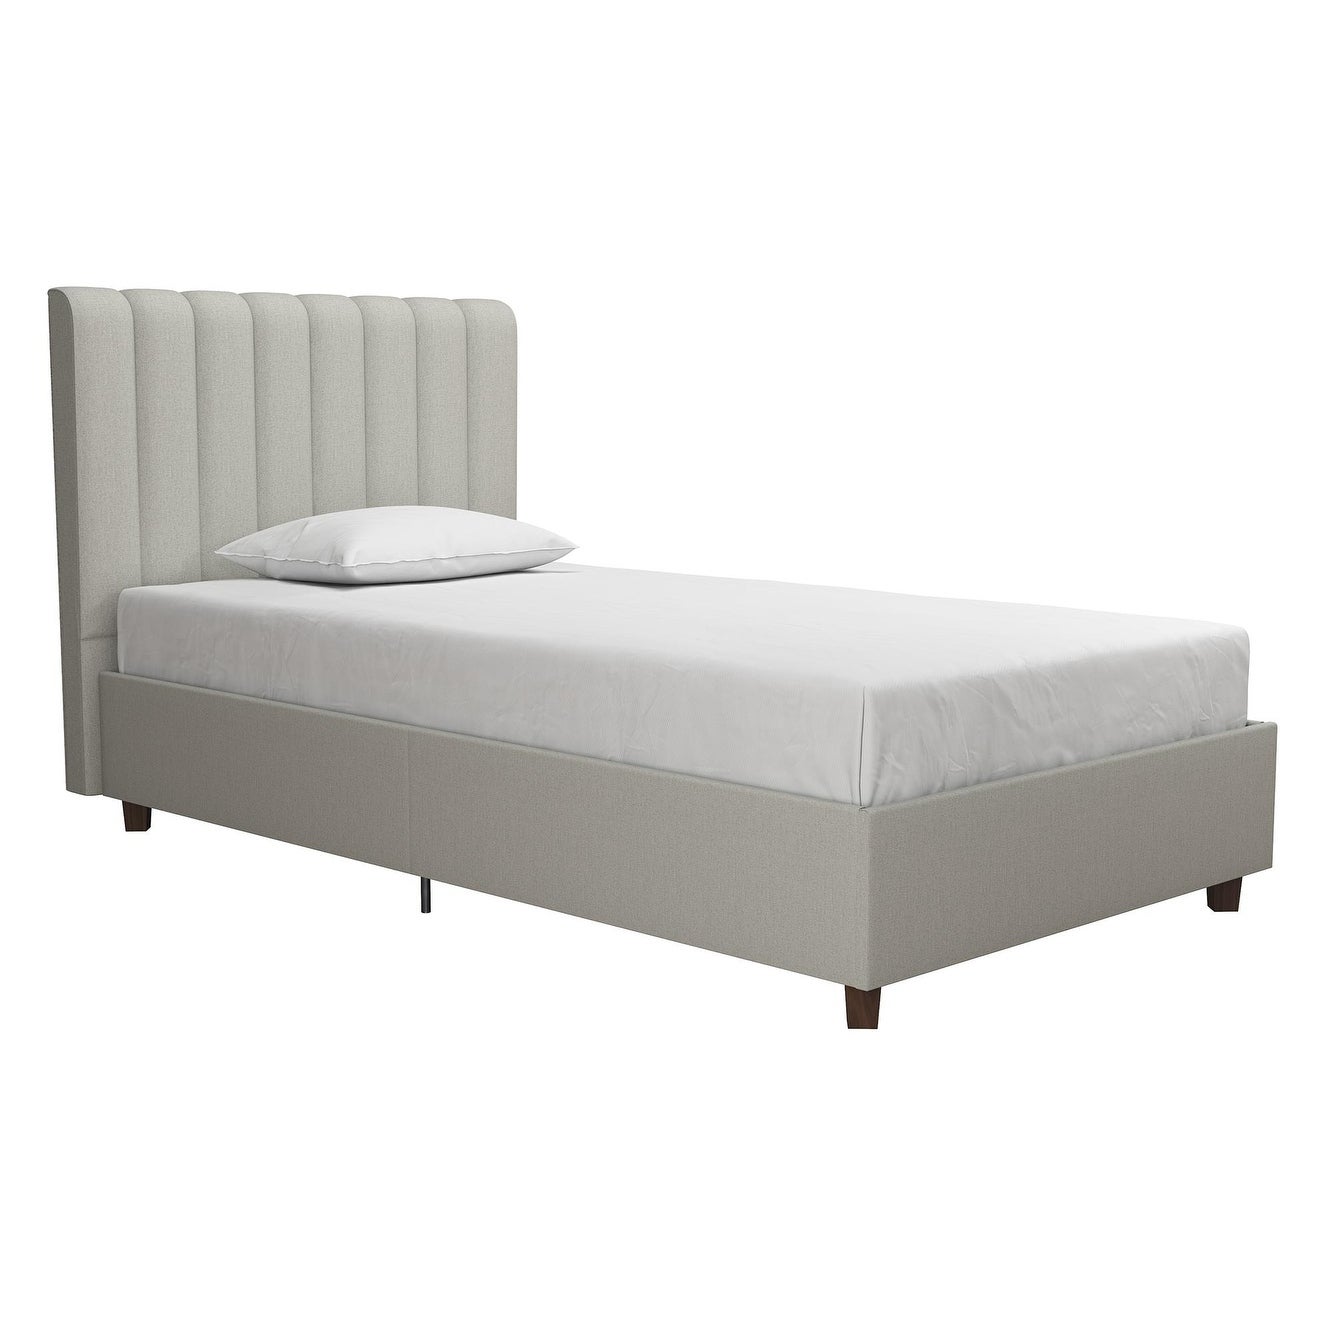 Kingbird Furniture Company Microfiber Couch Ashley Furniture-1 11